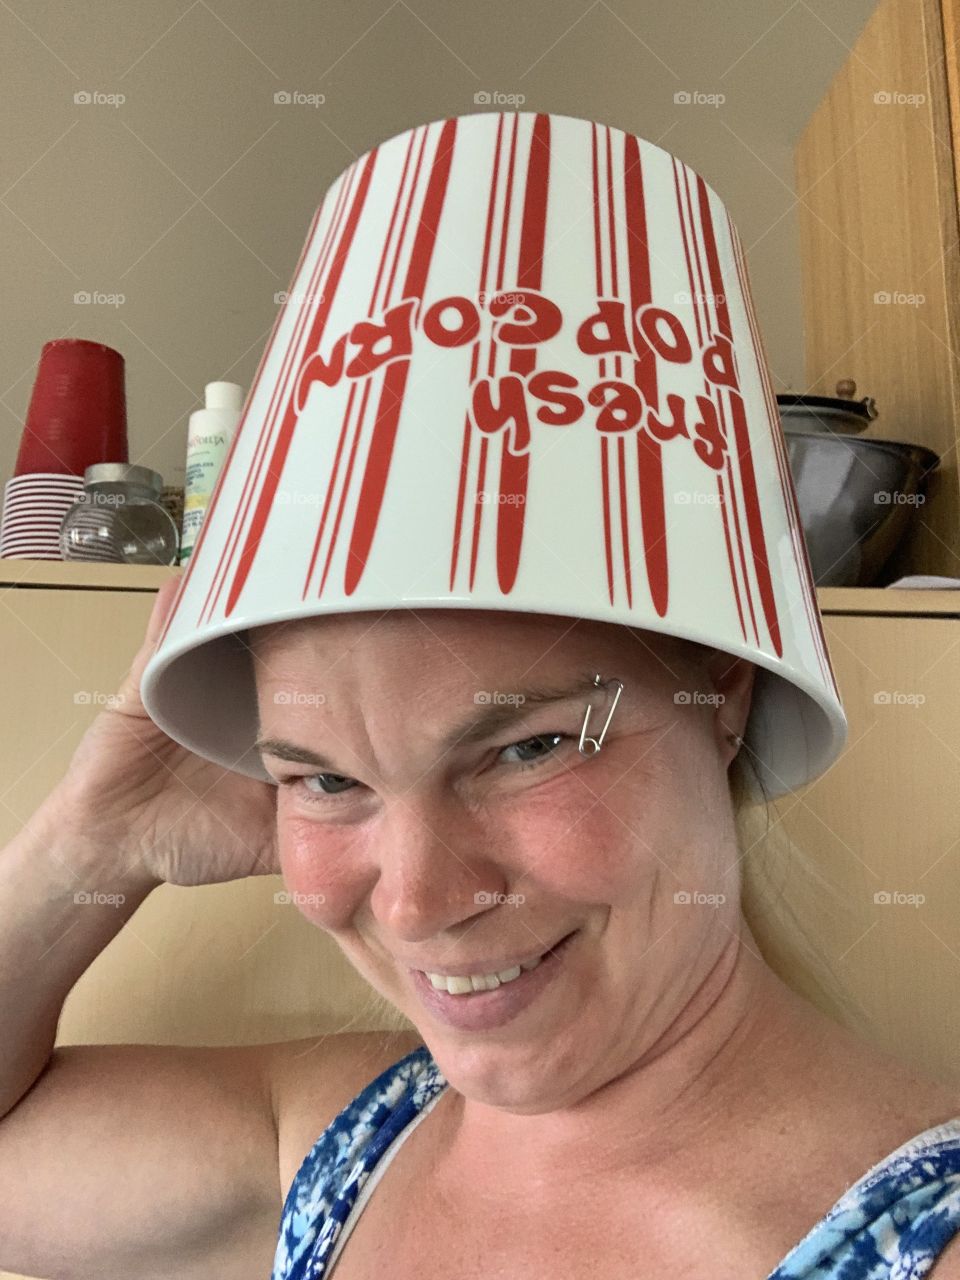 Popcorn bucket on the head for fun 